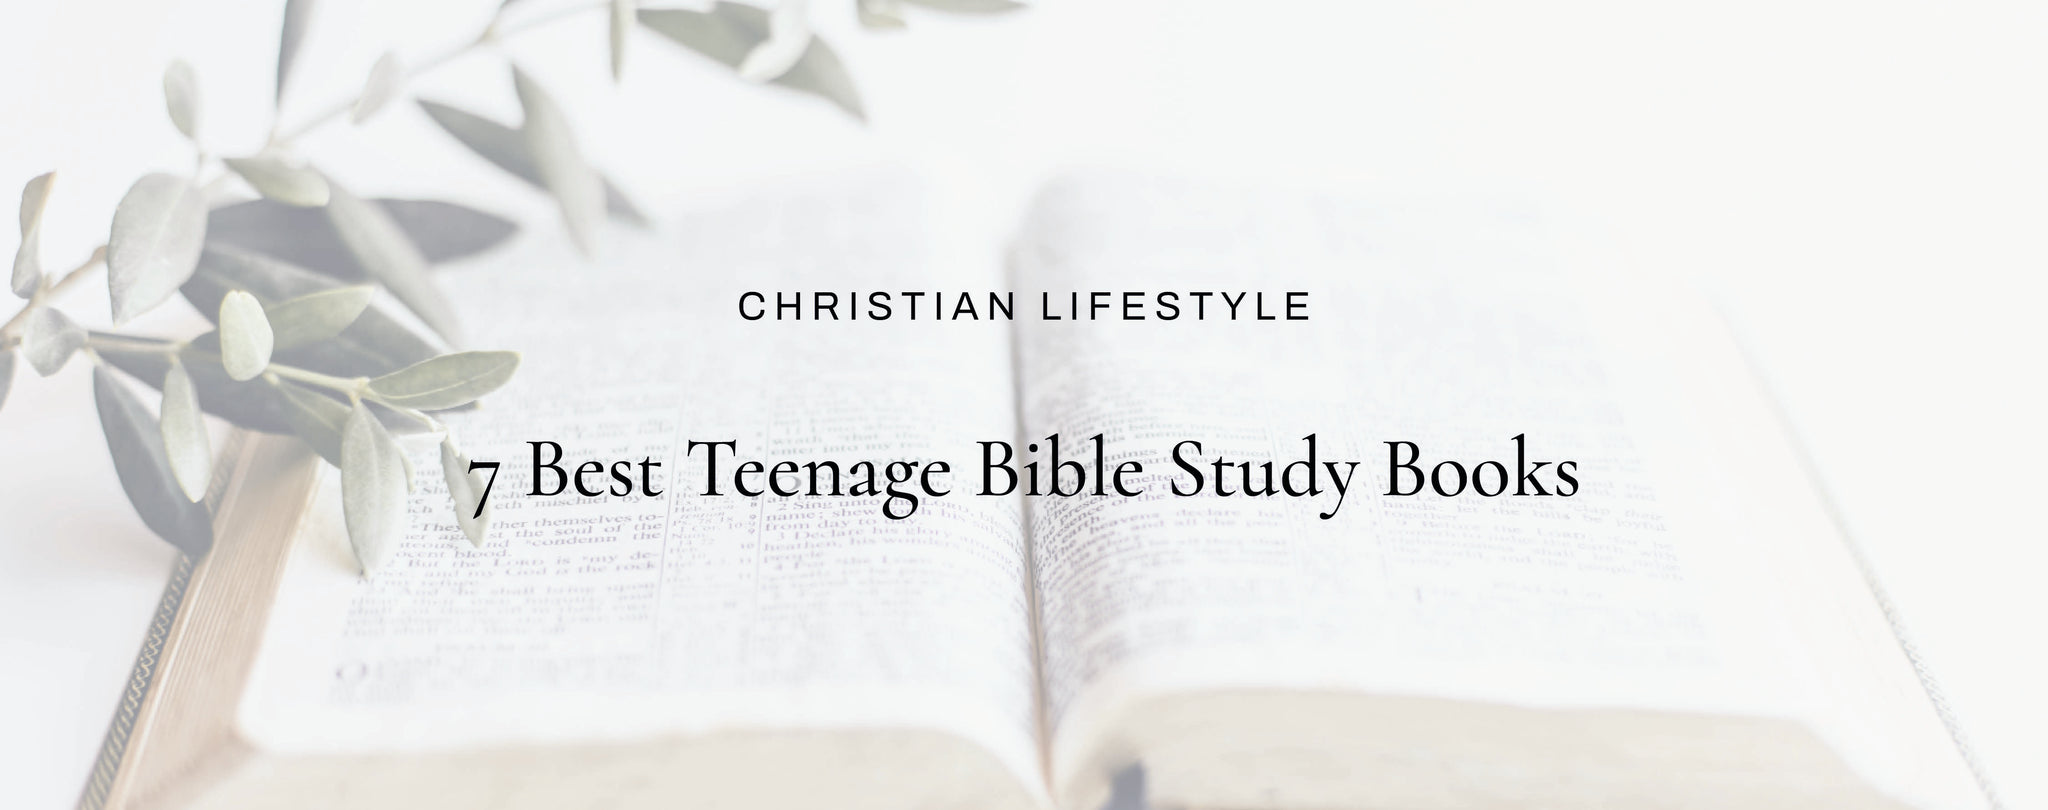 7 Best Teenage Bible Study Books